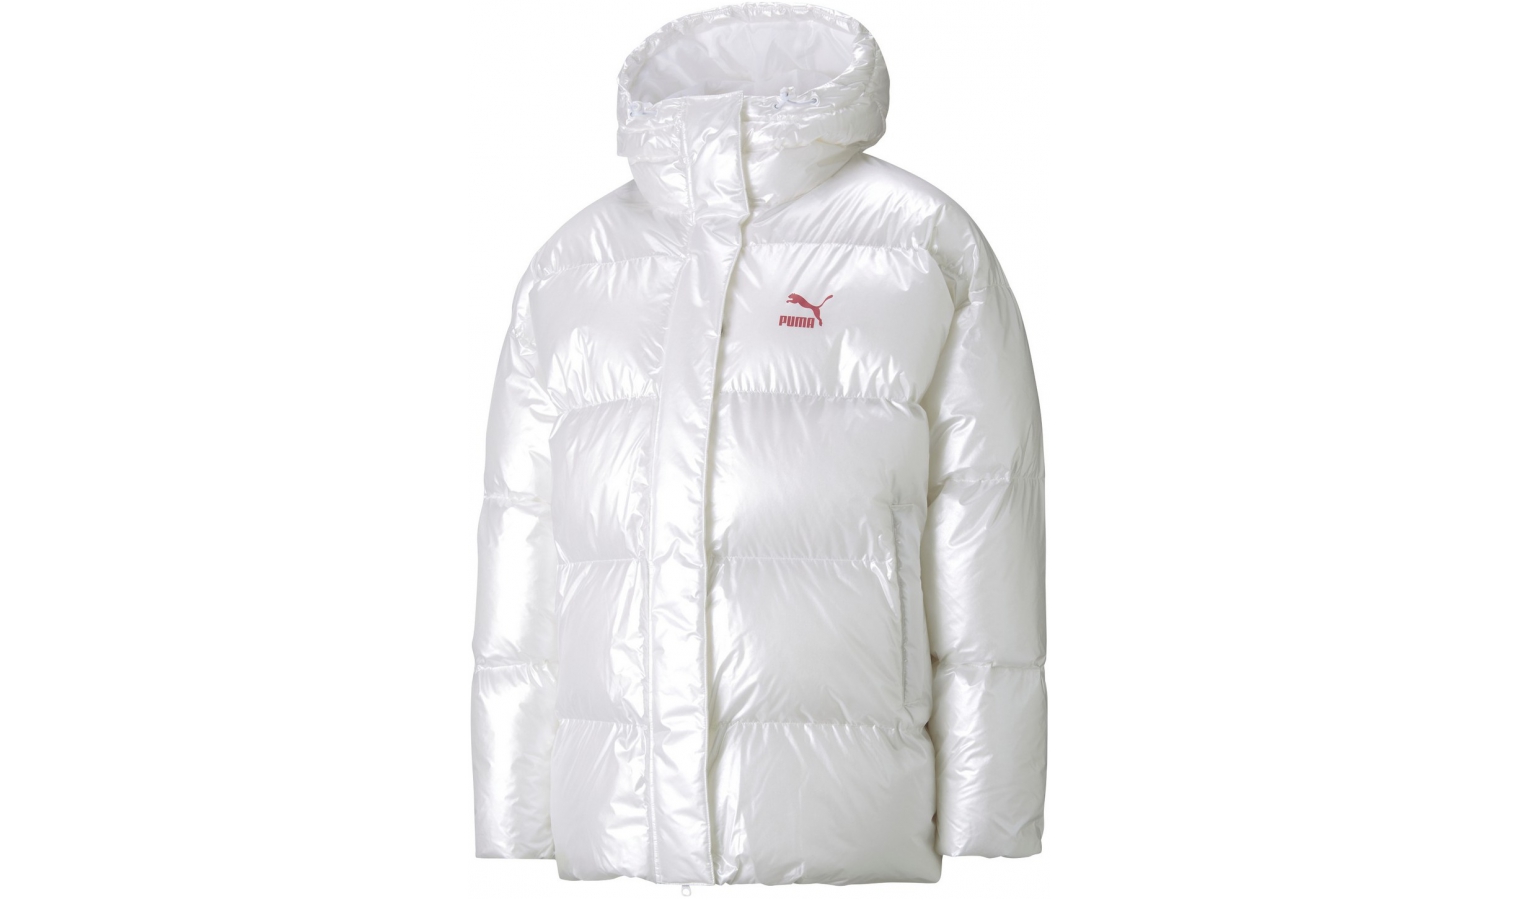 JACKET Puma Womens white AD winter jacket OVERSIZED W CLASSICS |